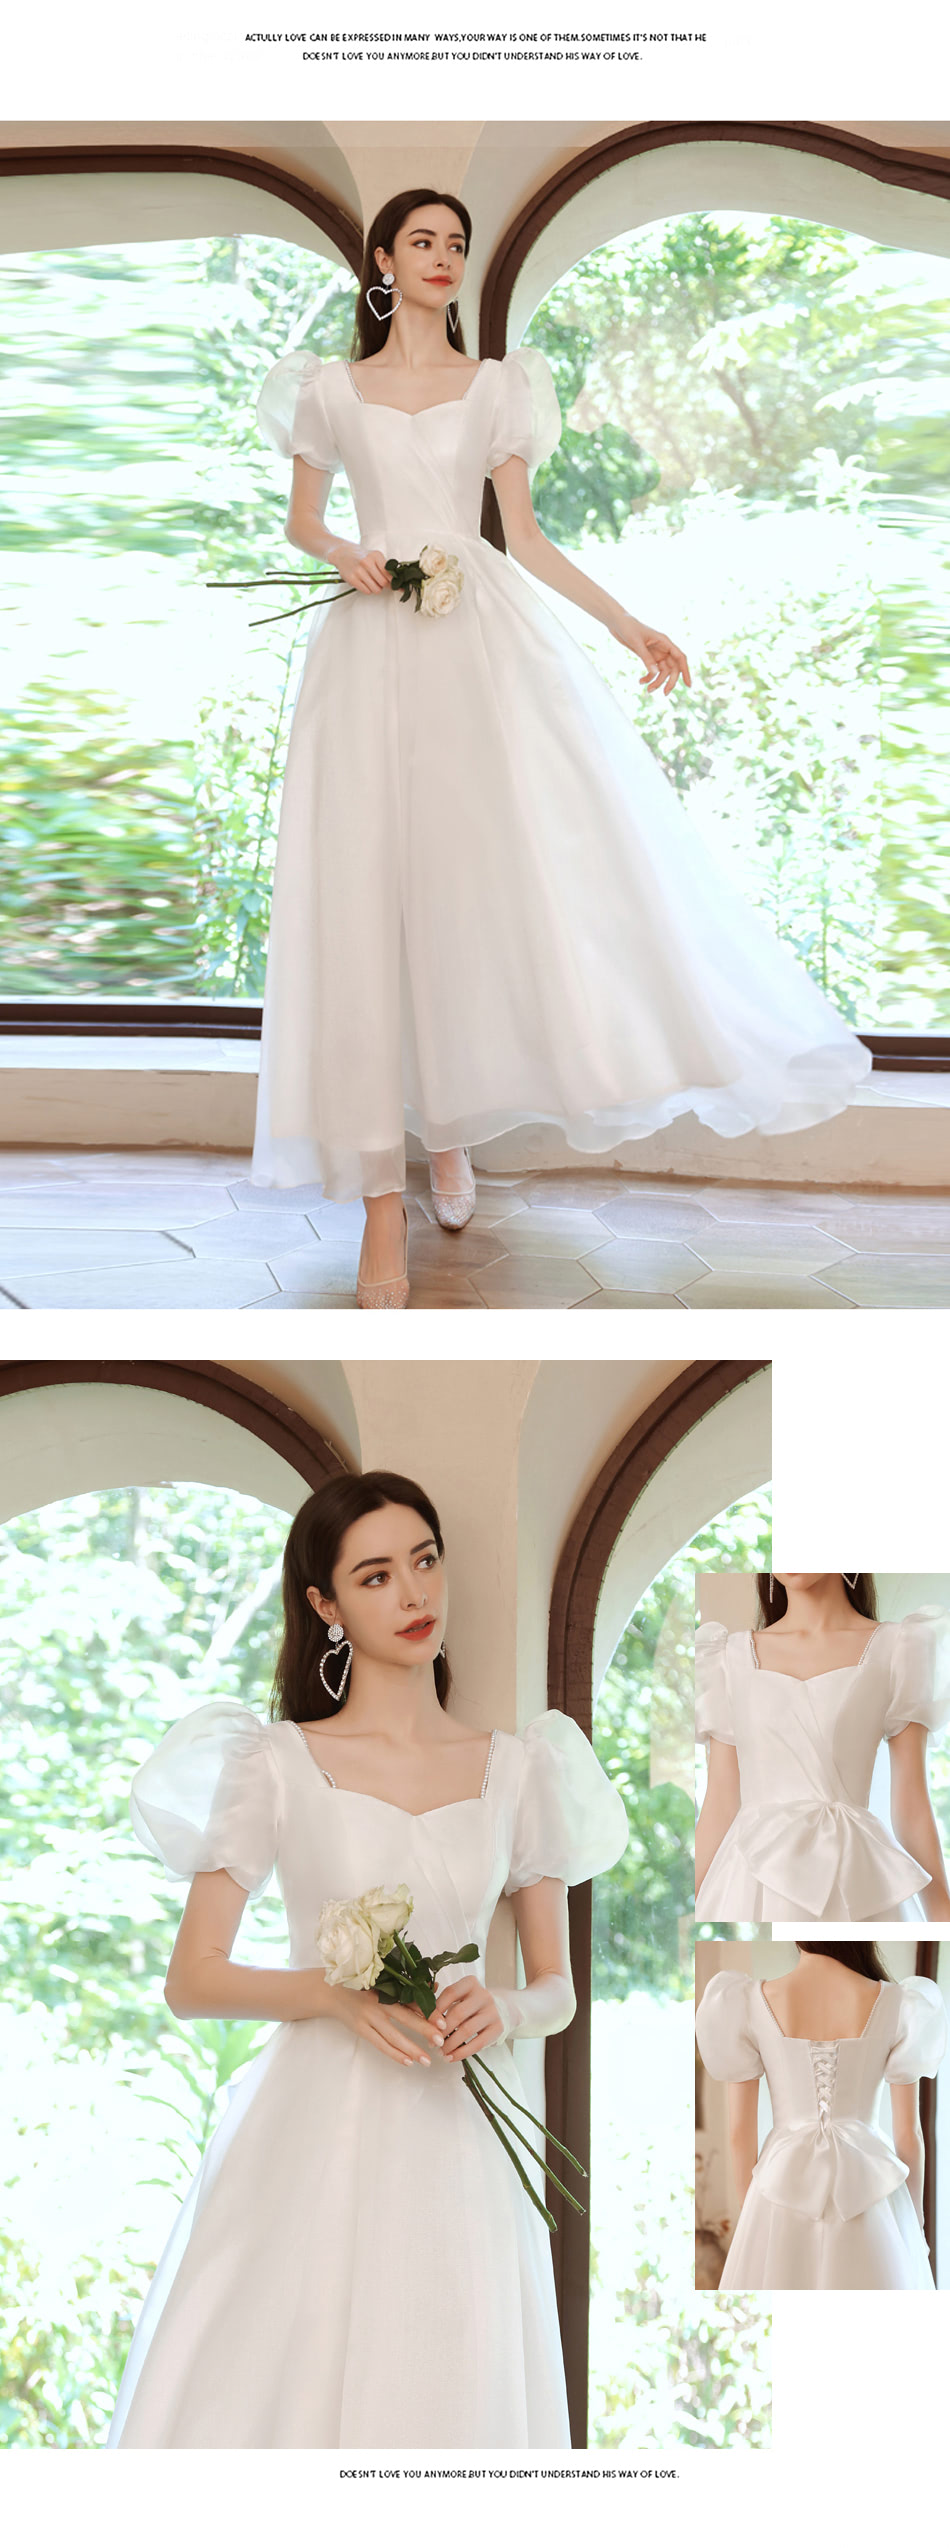 White-Short-Puff-Sleeve-Prom-Formal-Ball-Gown-Evening-Dress09.jpg